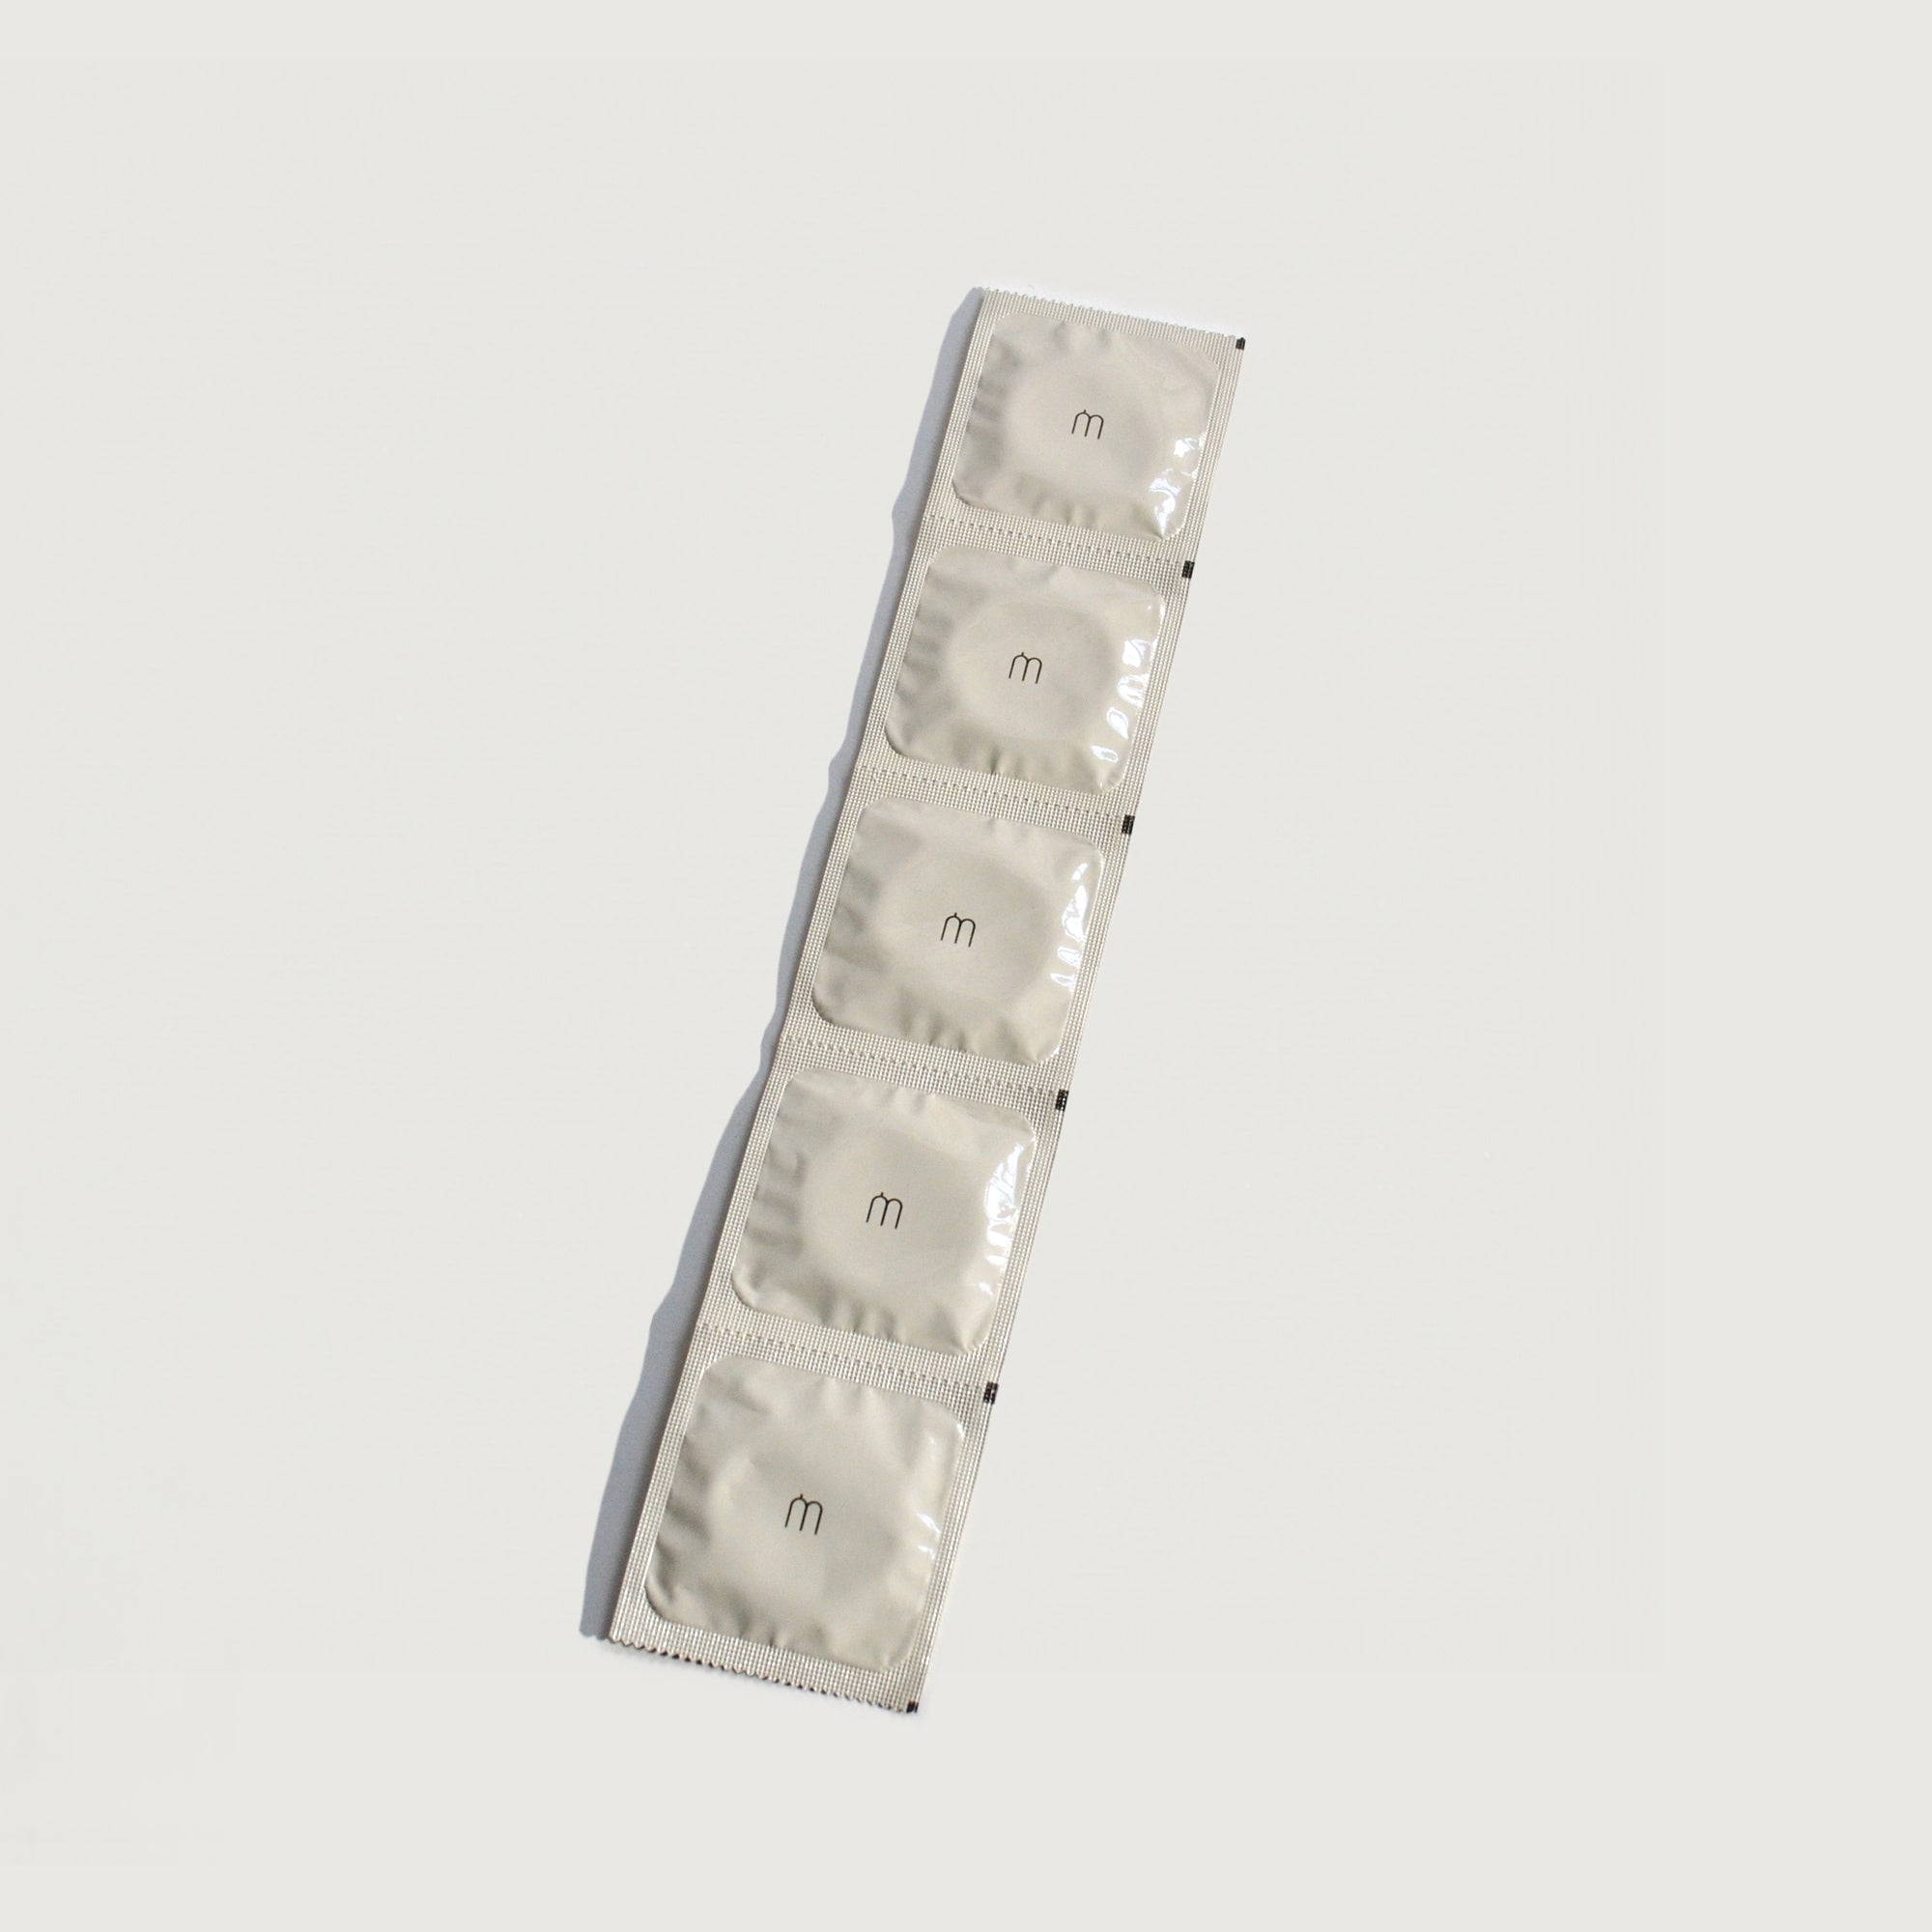 mysize condoms Archives - Supermarket News